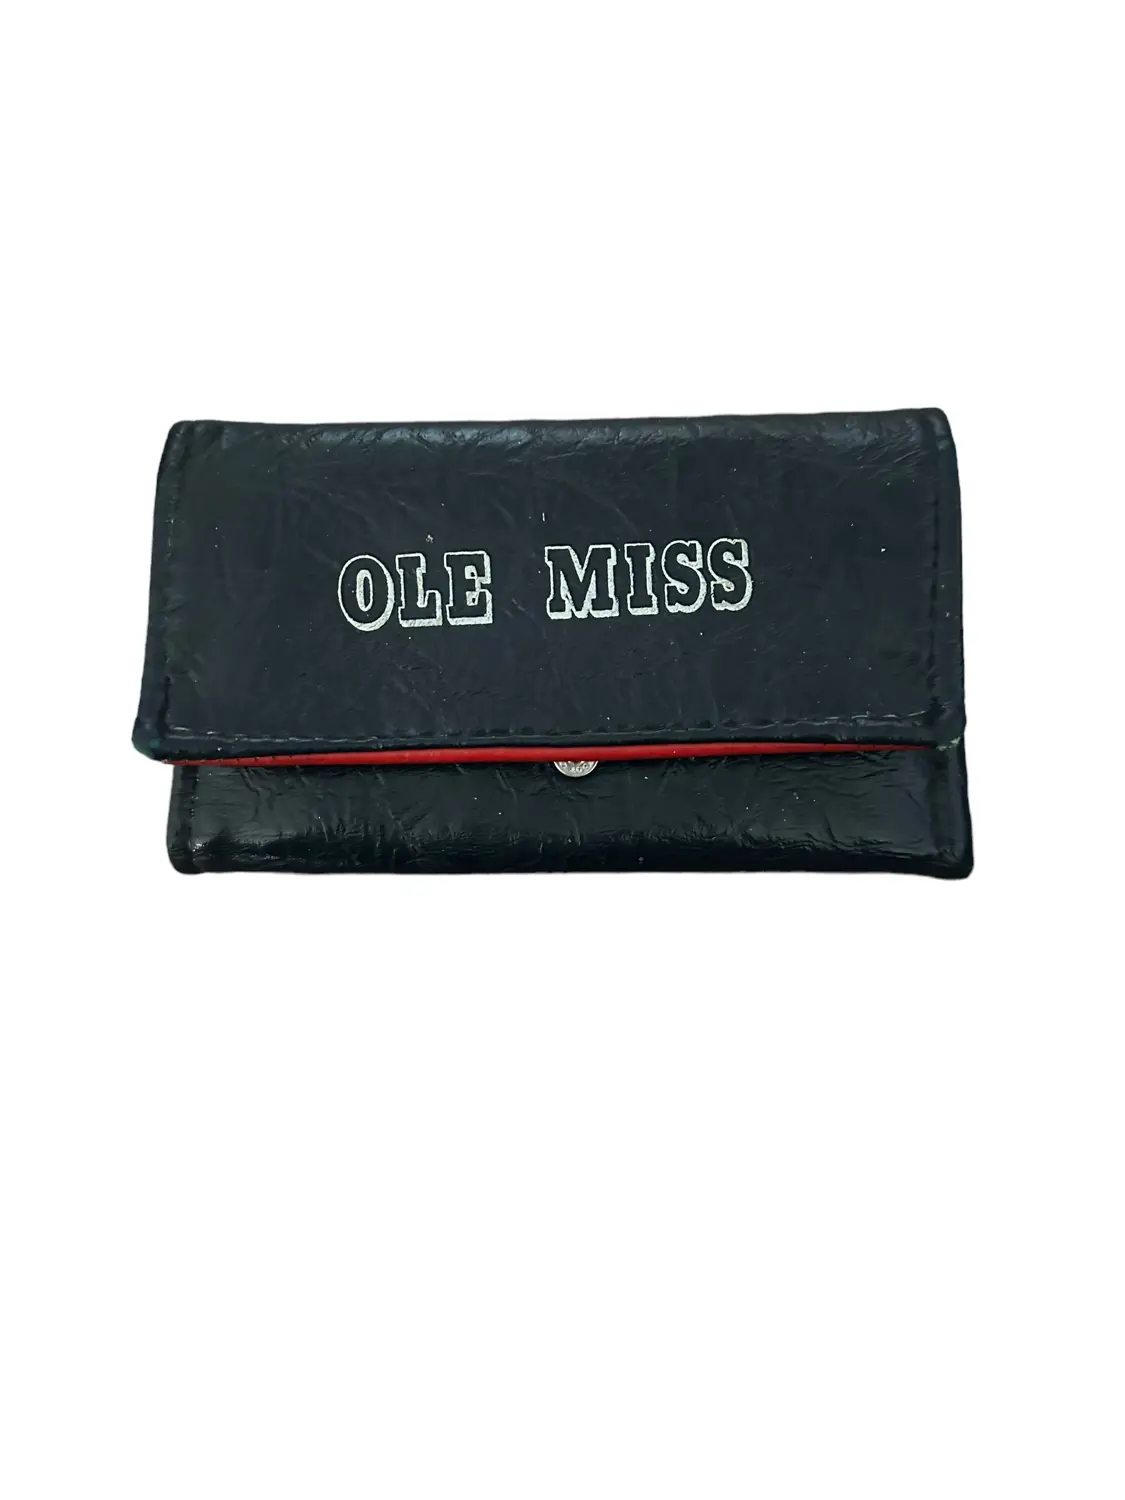 Ole miss vintage wallet